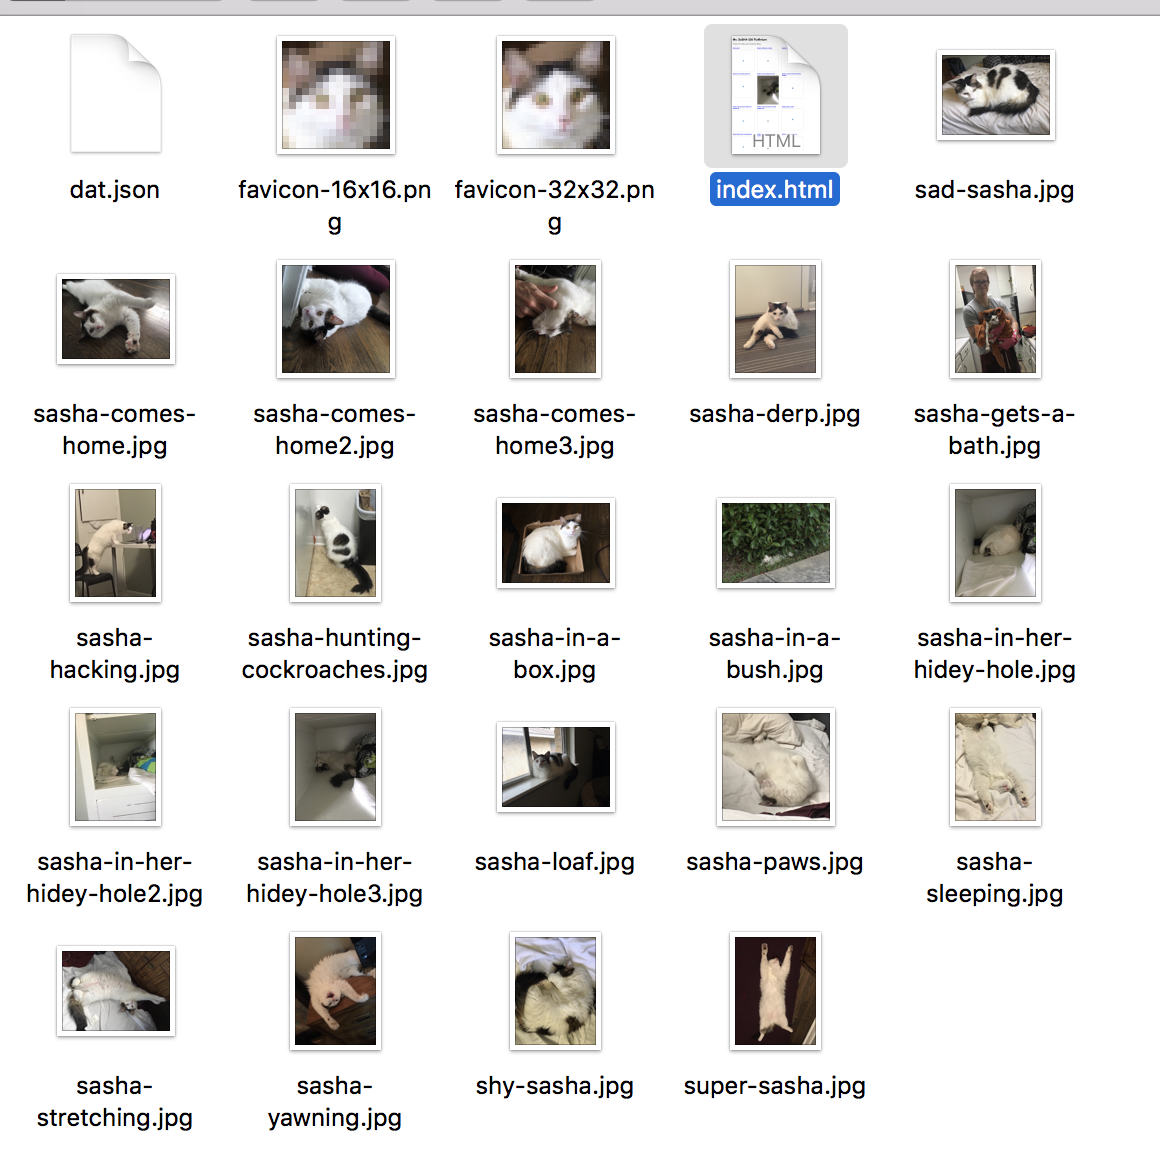 Sasha's cat files